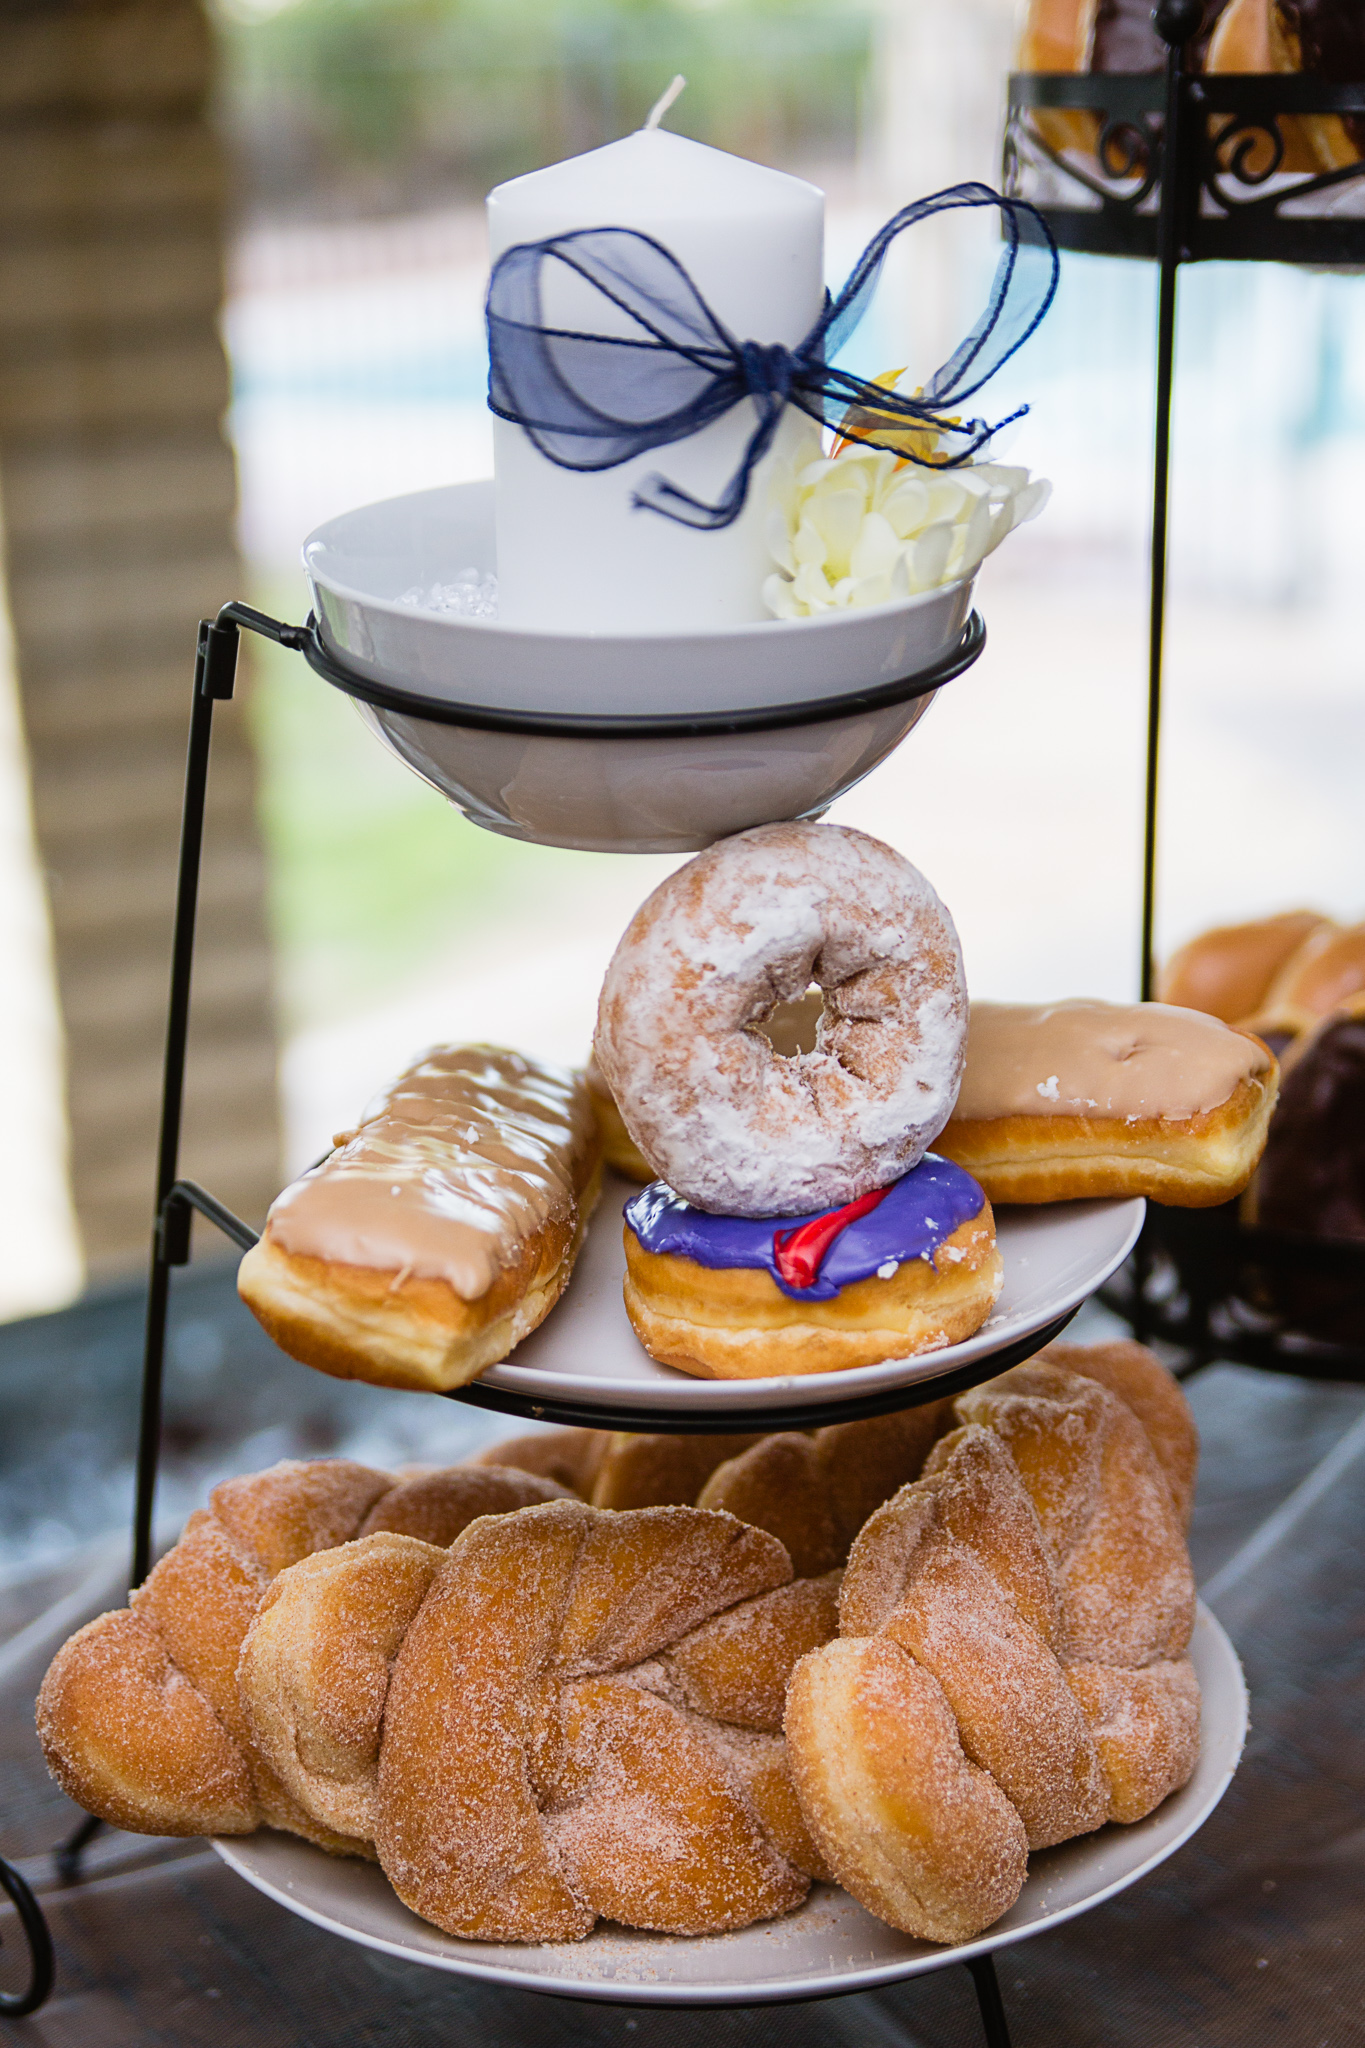 Wedding donuts as a cake alternative.